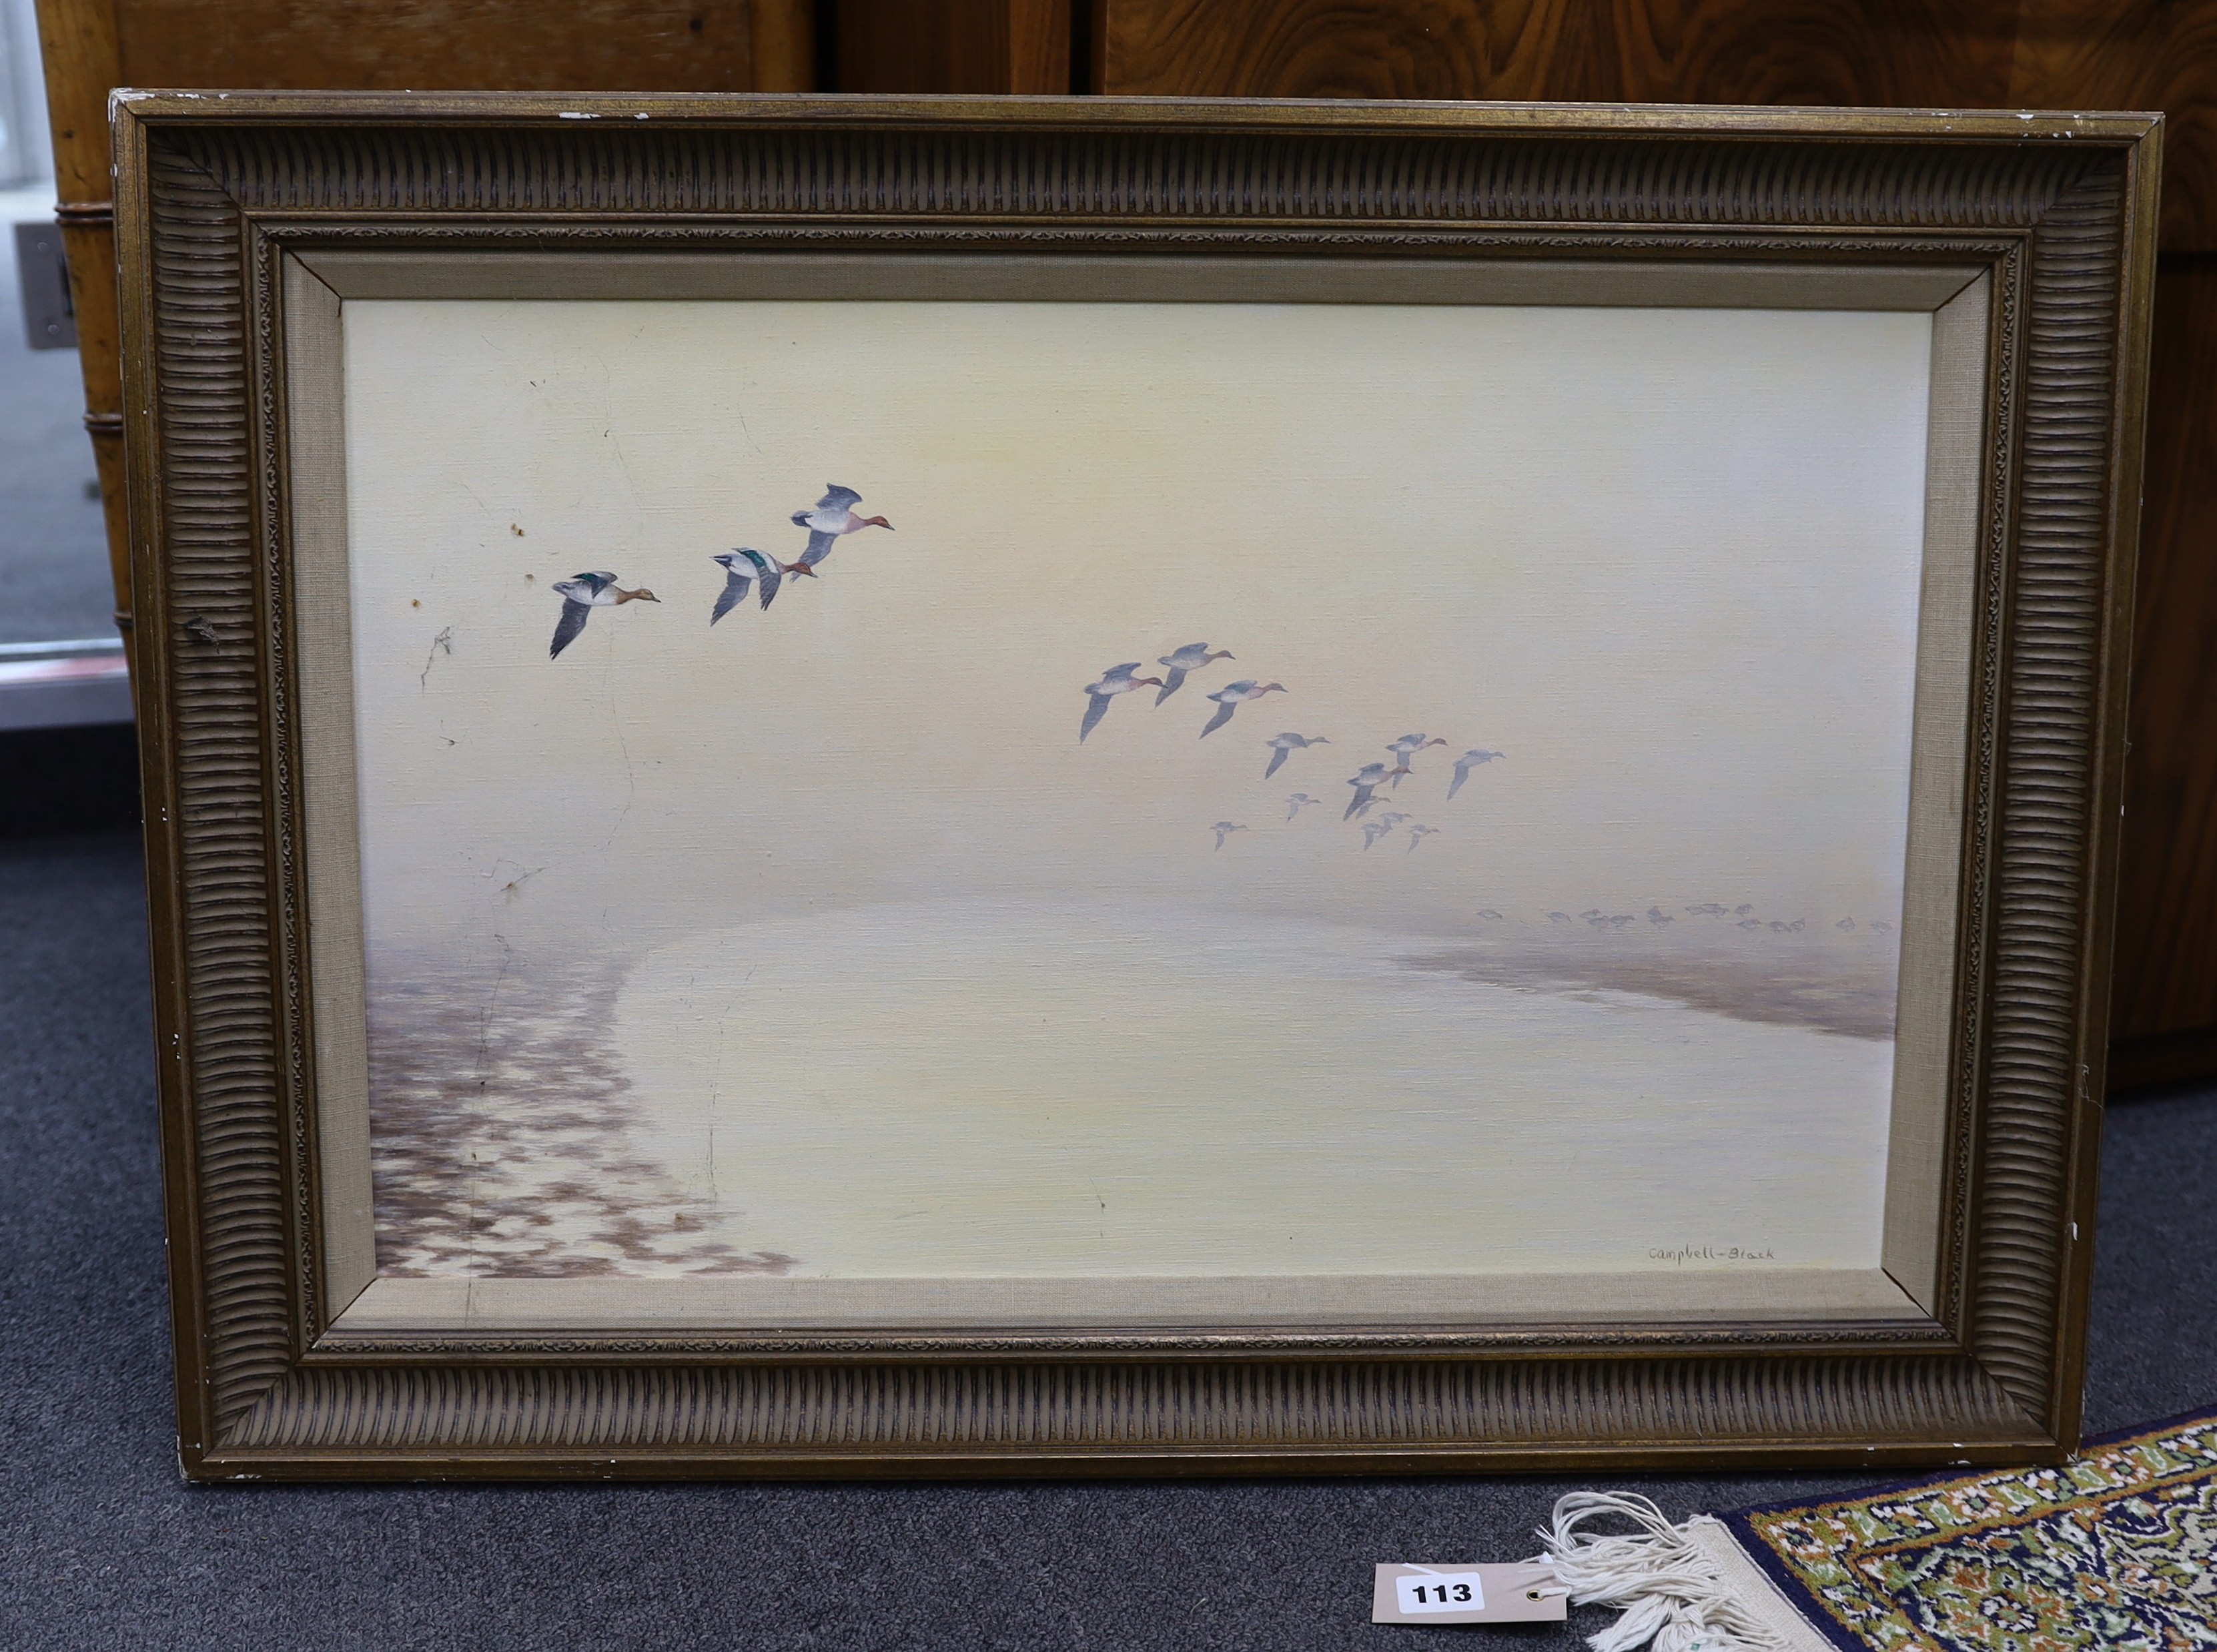 Geoffrey Campbell-Black (b.1925), oil on canvas, Ducks in flight, signed, 39 x 61cm